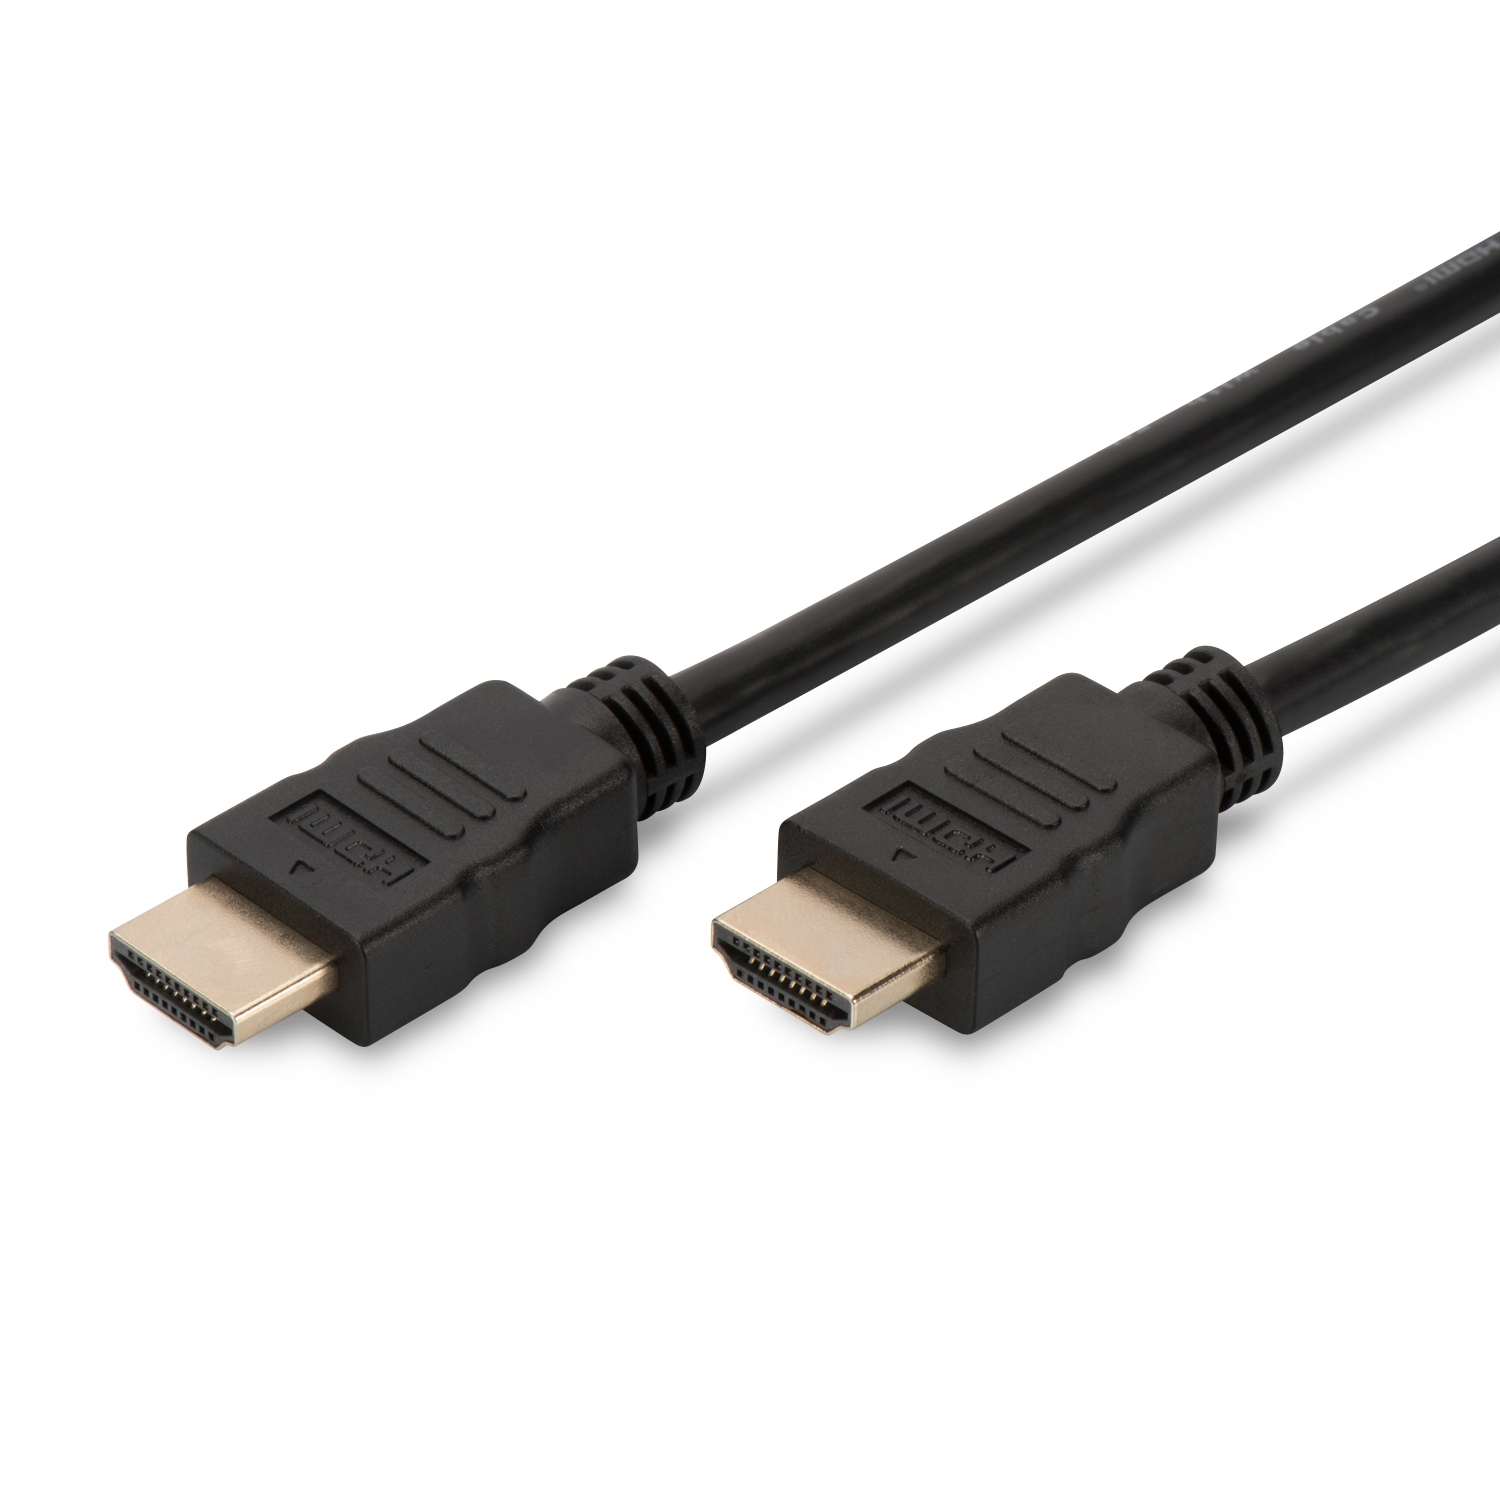 HDMI Cable (19P 2.0M 1.4)